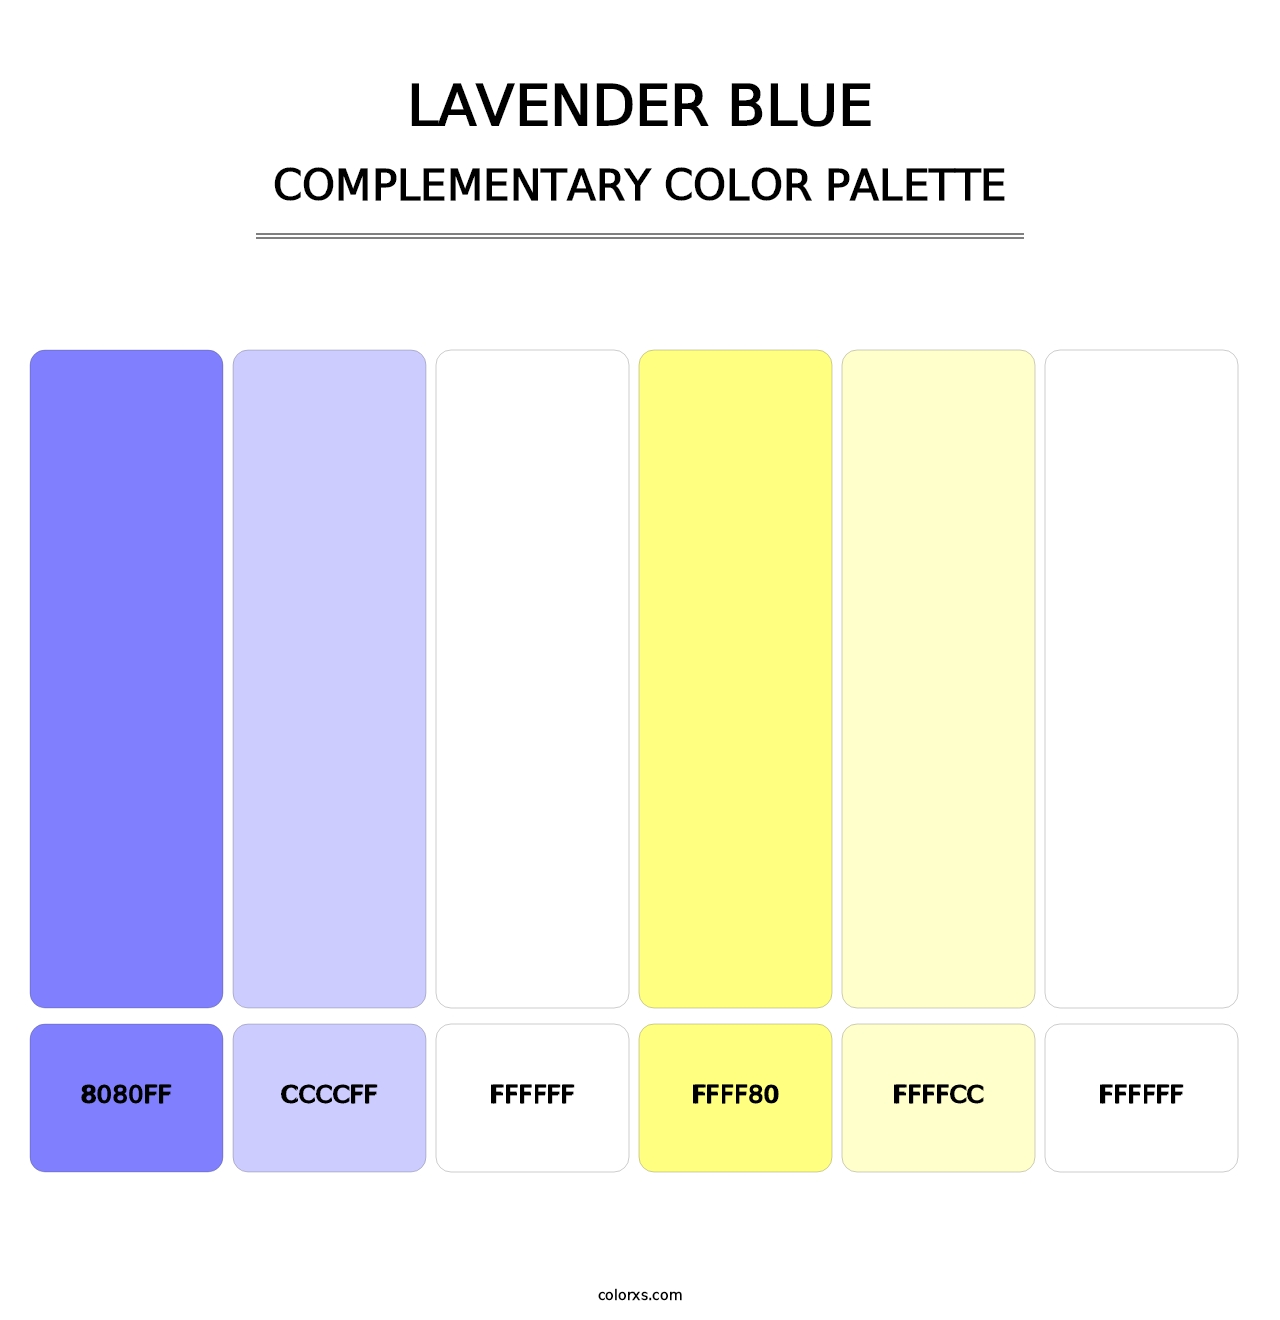 Lavender Blue - Complementary Color Palette